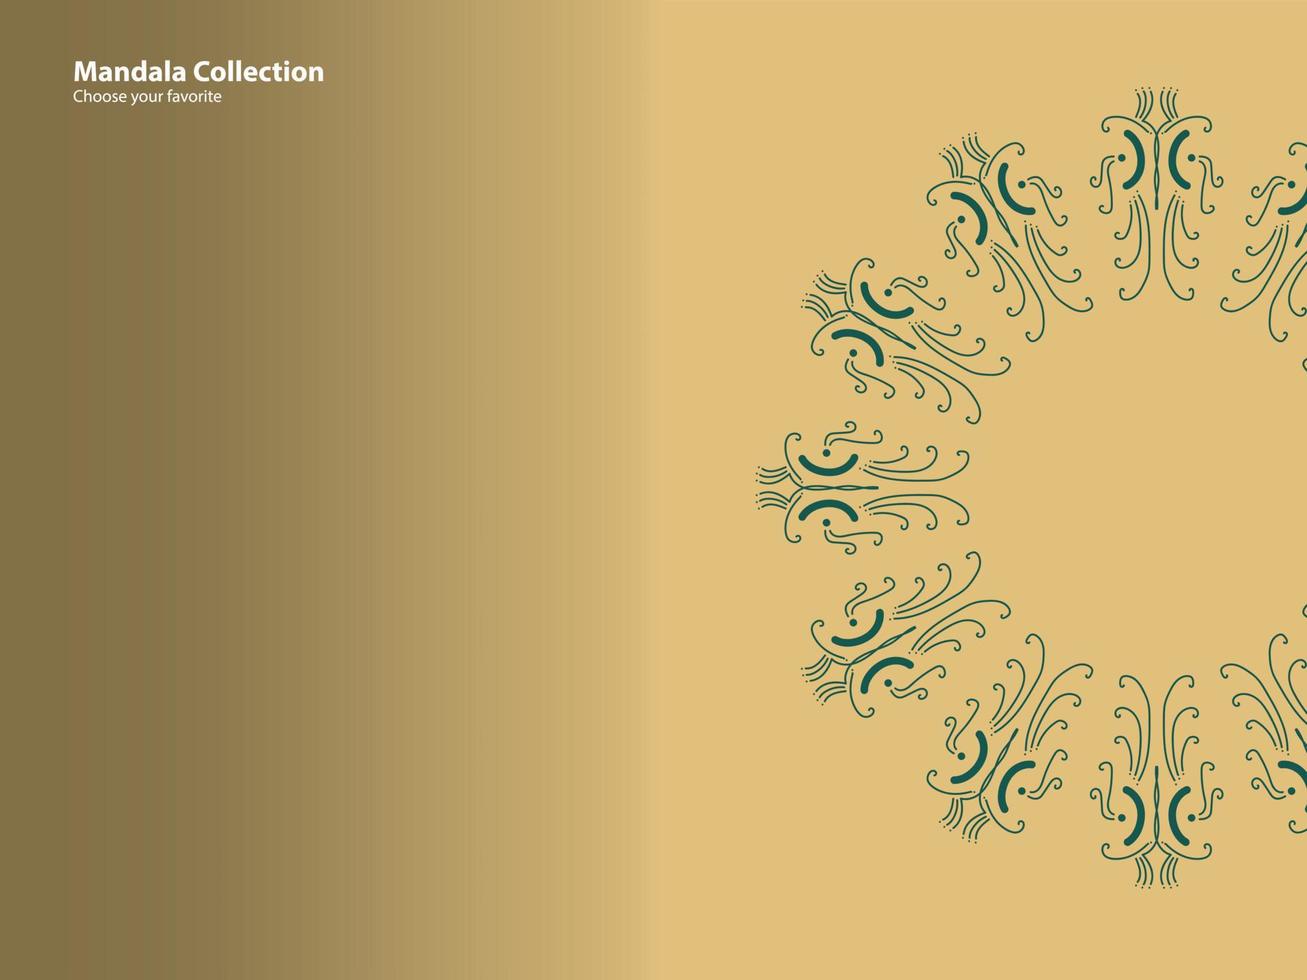 mandala mönster vintage etnisk stammall stilelement tapet bakgrundsmotiv cirkel konst textur tryck traditionell elegant rpund prydnad teckning dekoration guld meditation blomma asiatisk vektor